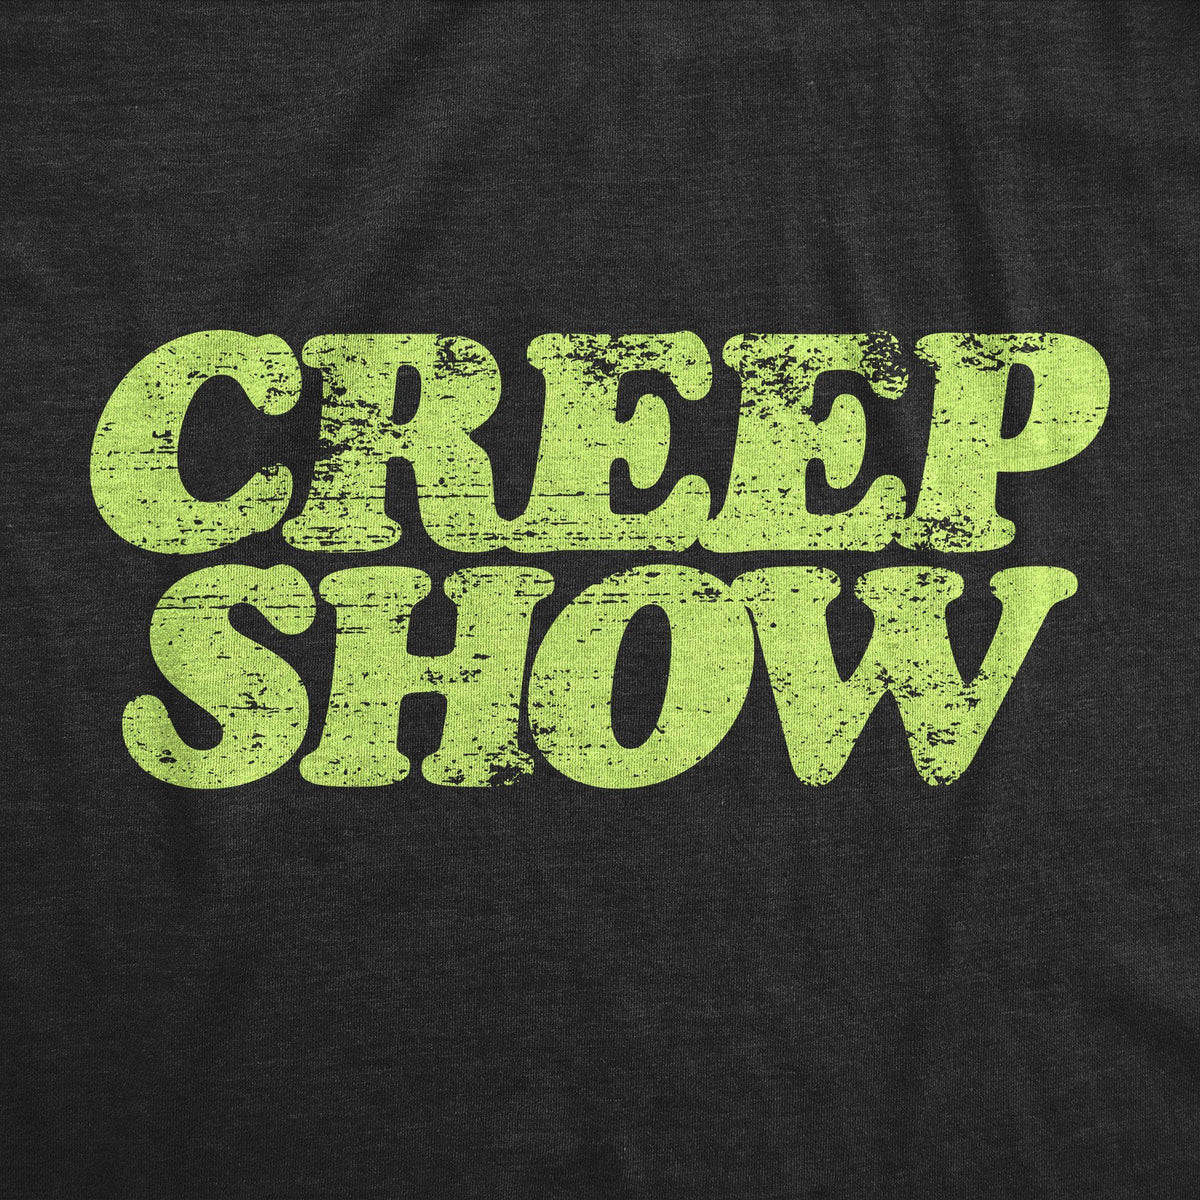 Creep Show Men&#39;s Tshirt - Crazy Dog T-Shirts